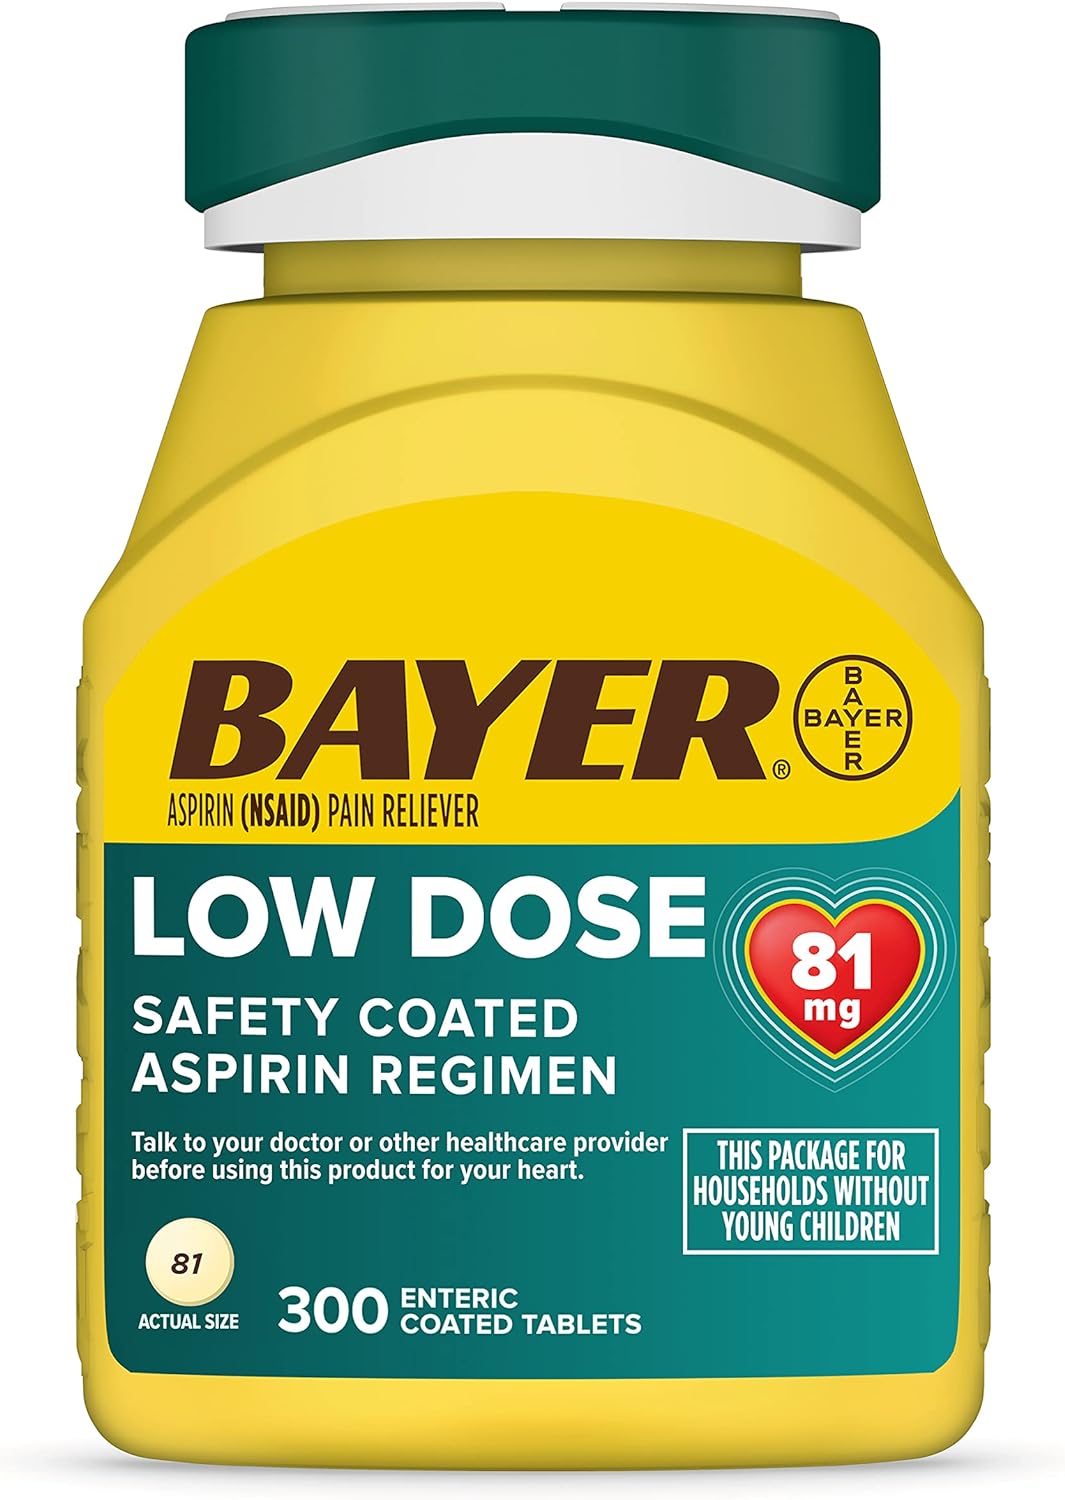 Bayer Aspirin Regimen, Low Dose (81 mg), Enteric Coated, 300 count